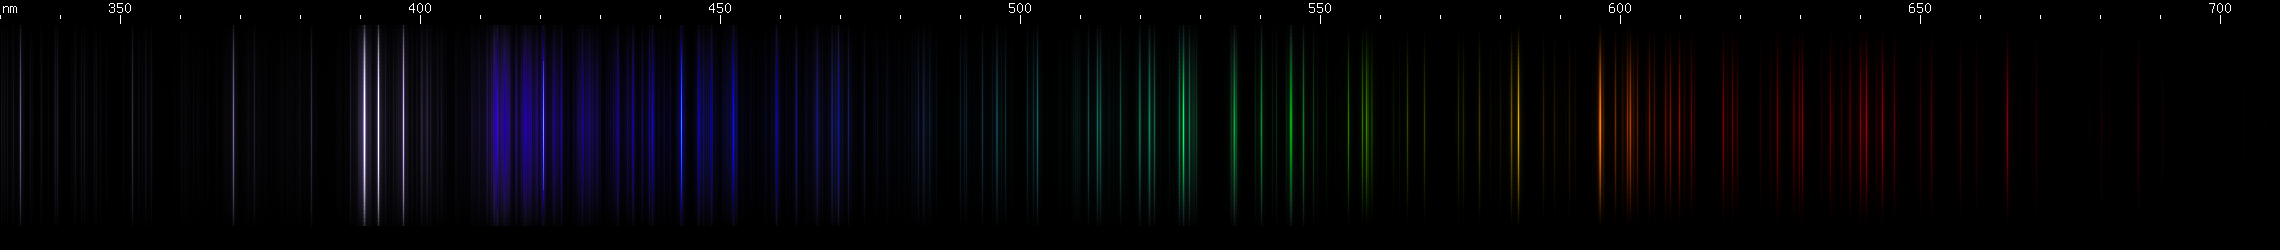 Spectral lines of Europium.